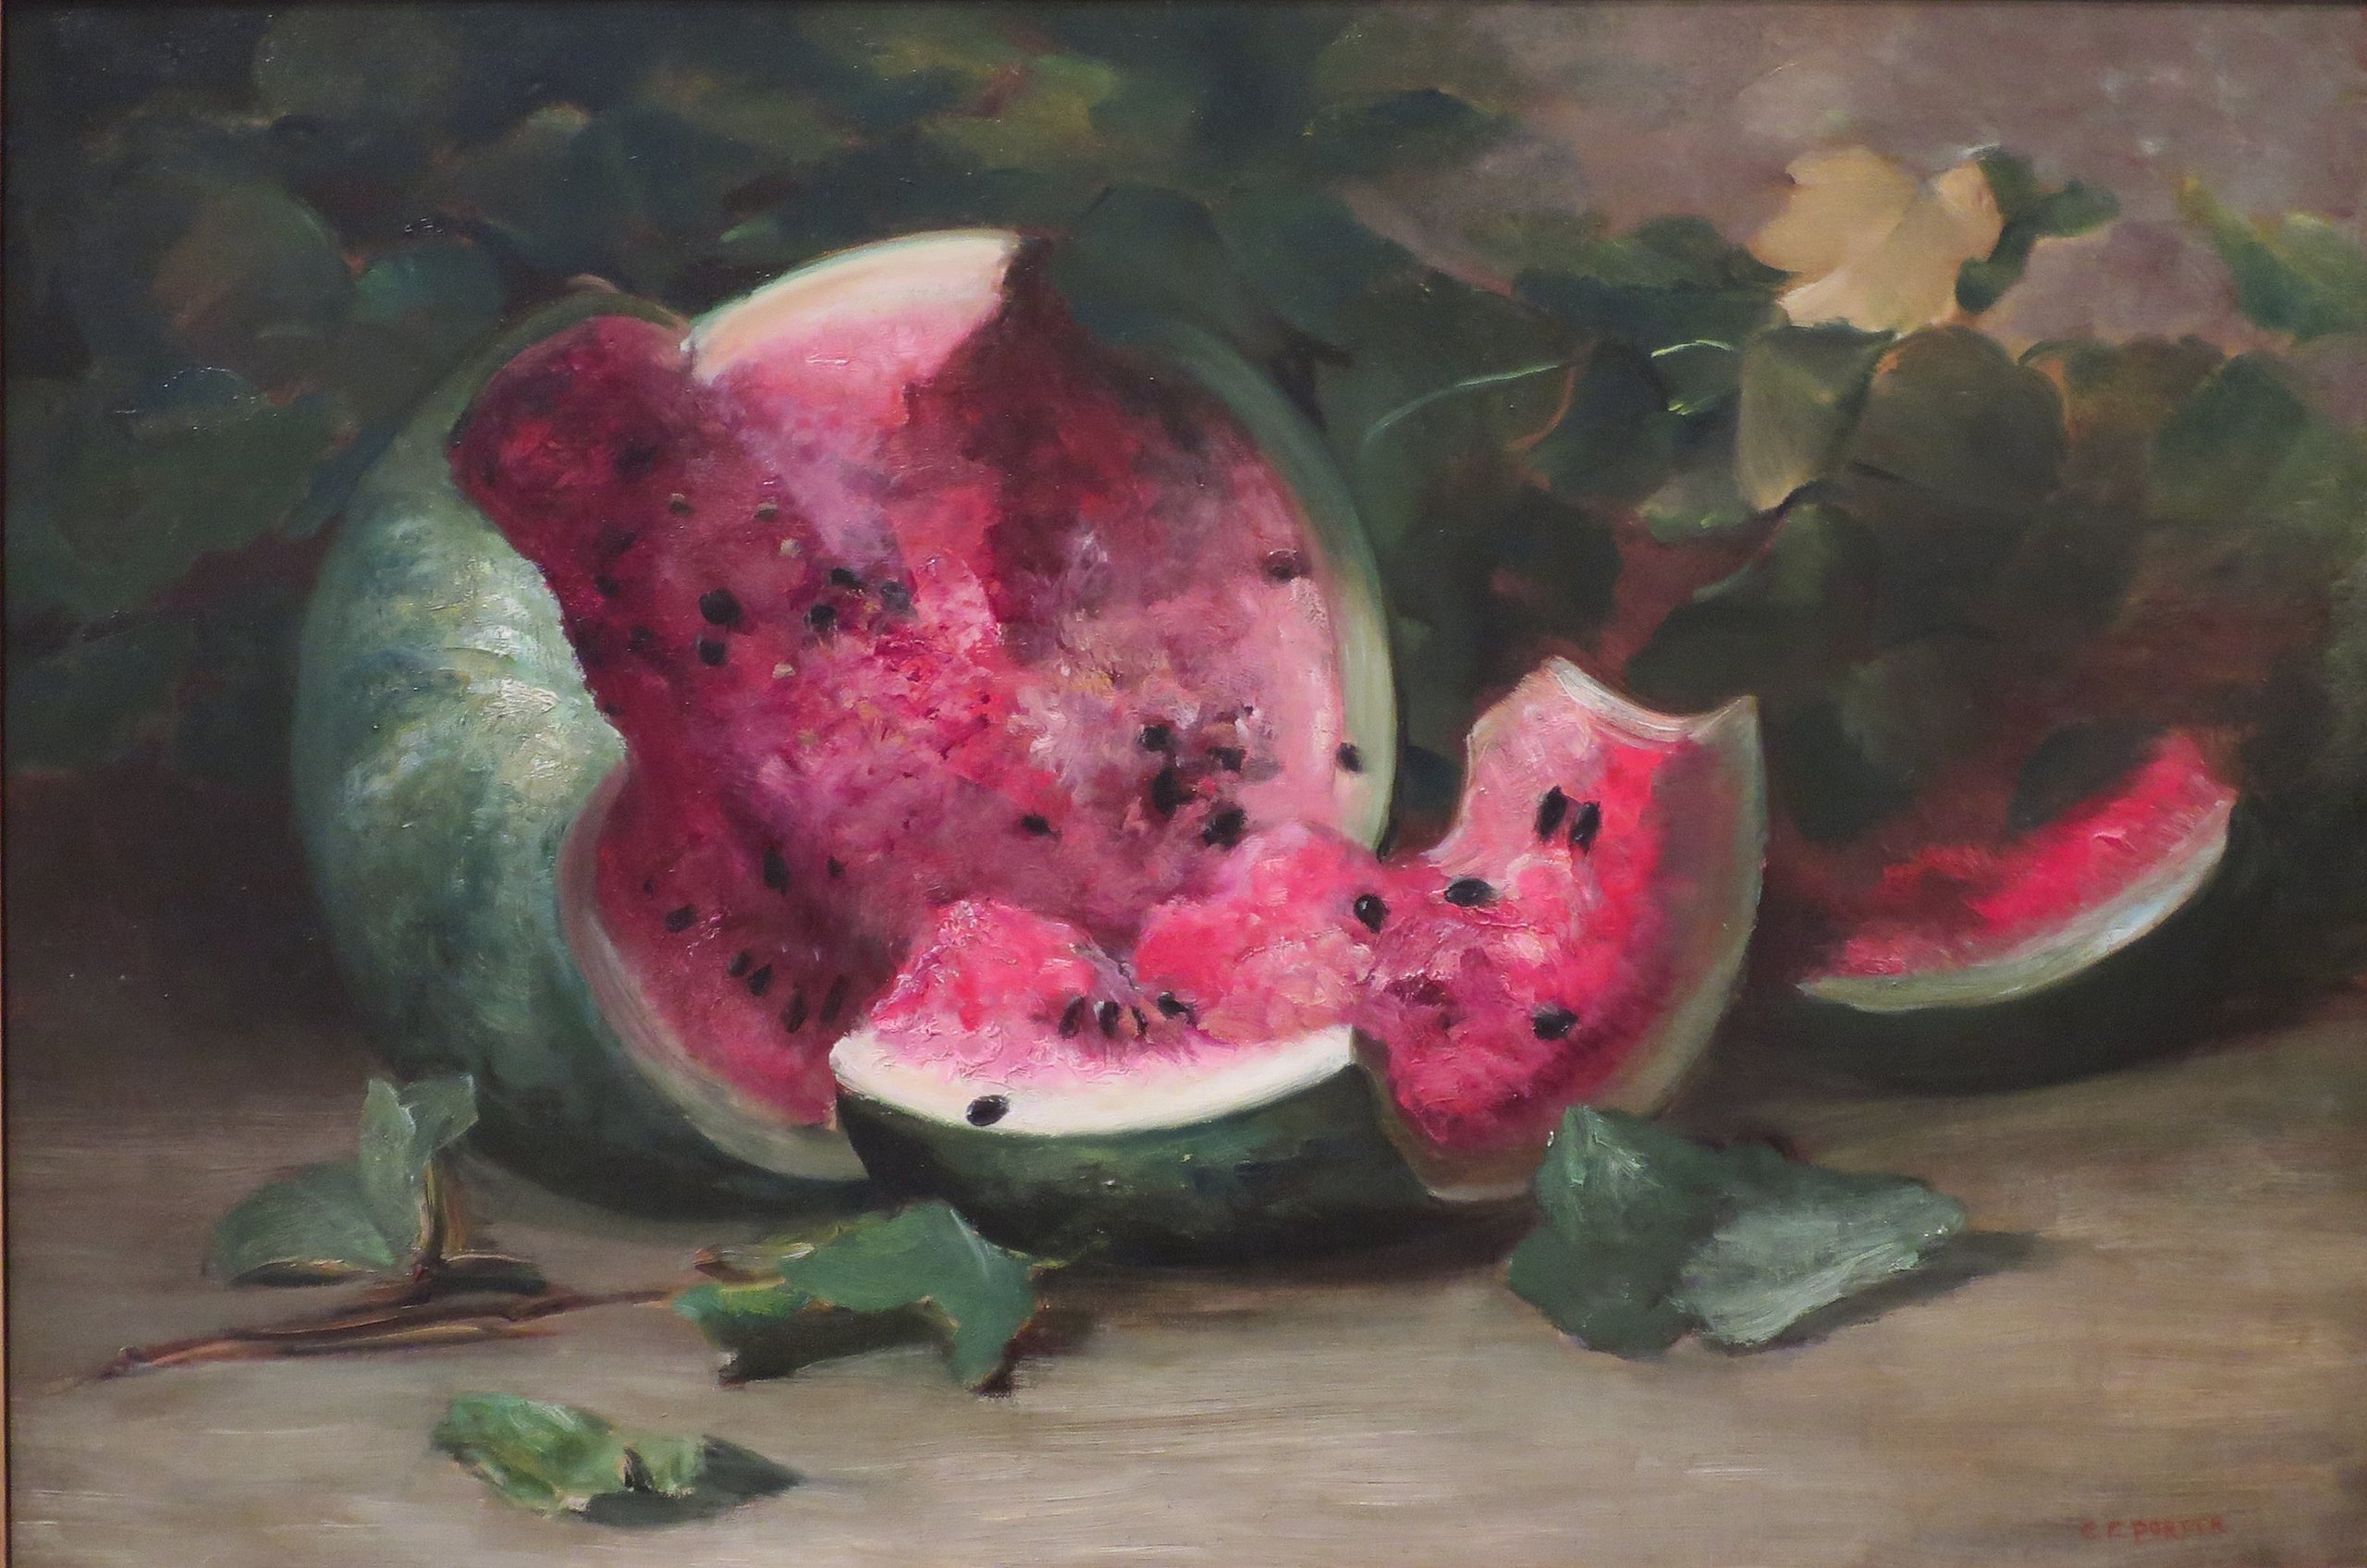 無題（破裂的西瓜） by Charles Ethan Porter - 約 1890 年 - 48.6 × 71.6 釐米 